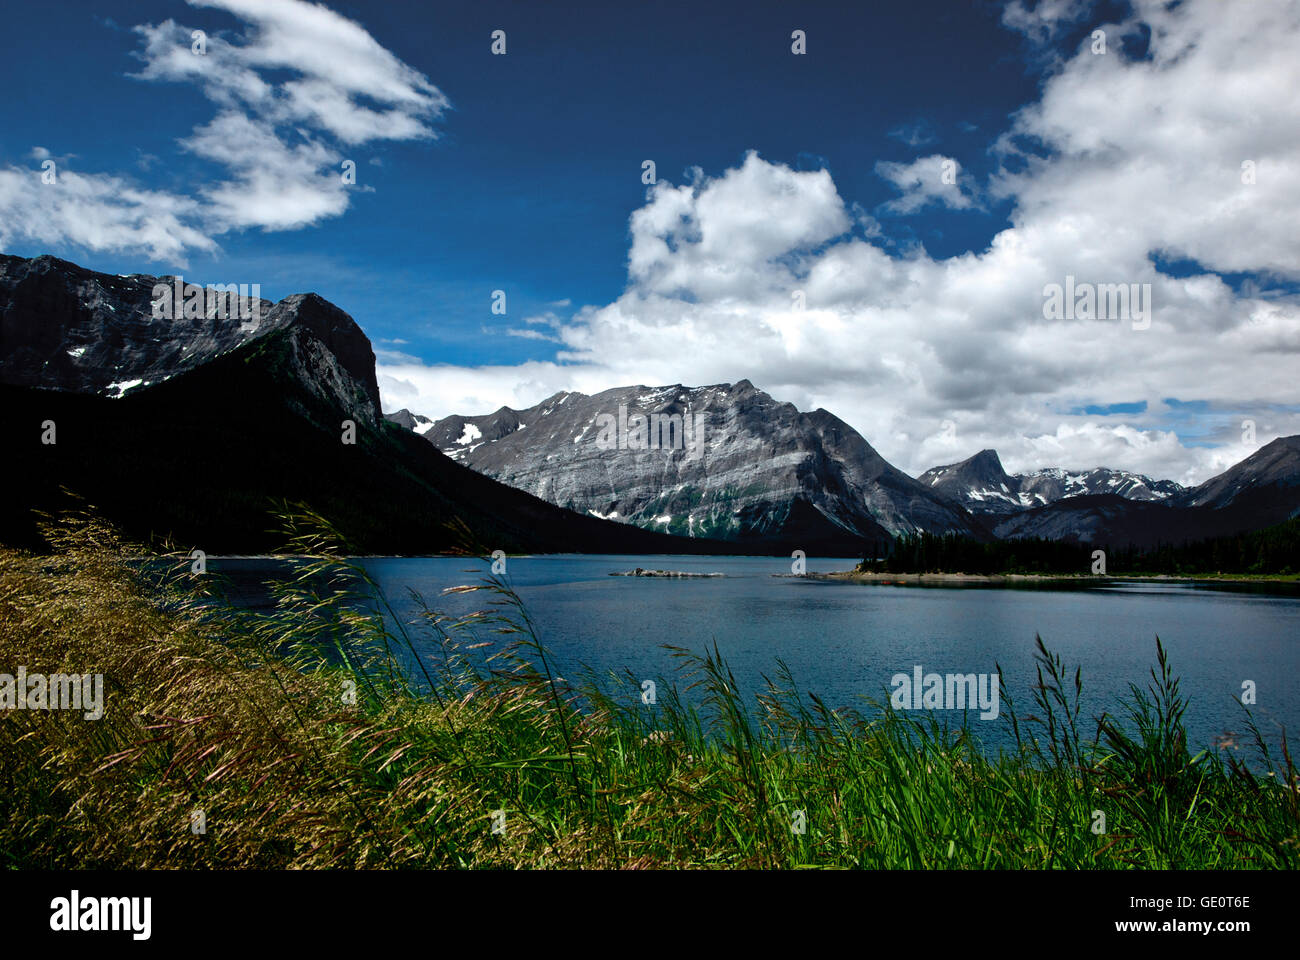 Upper Kananaskis Lake Rocky Mountains Alberta Canada mountain vista provincial park Stock Photo